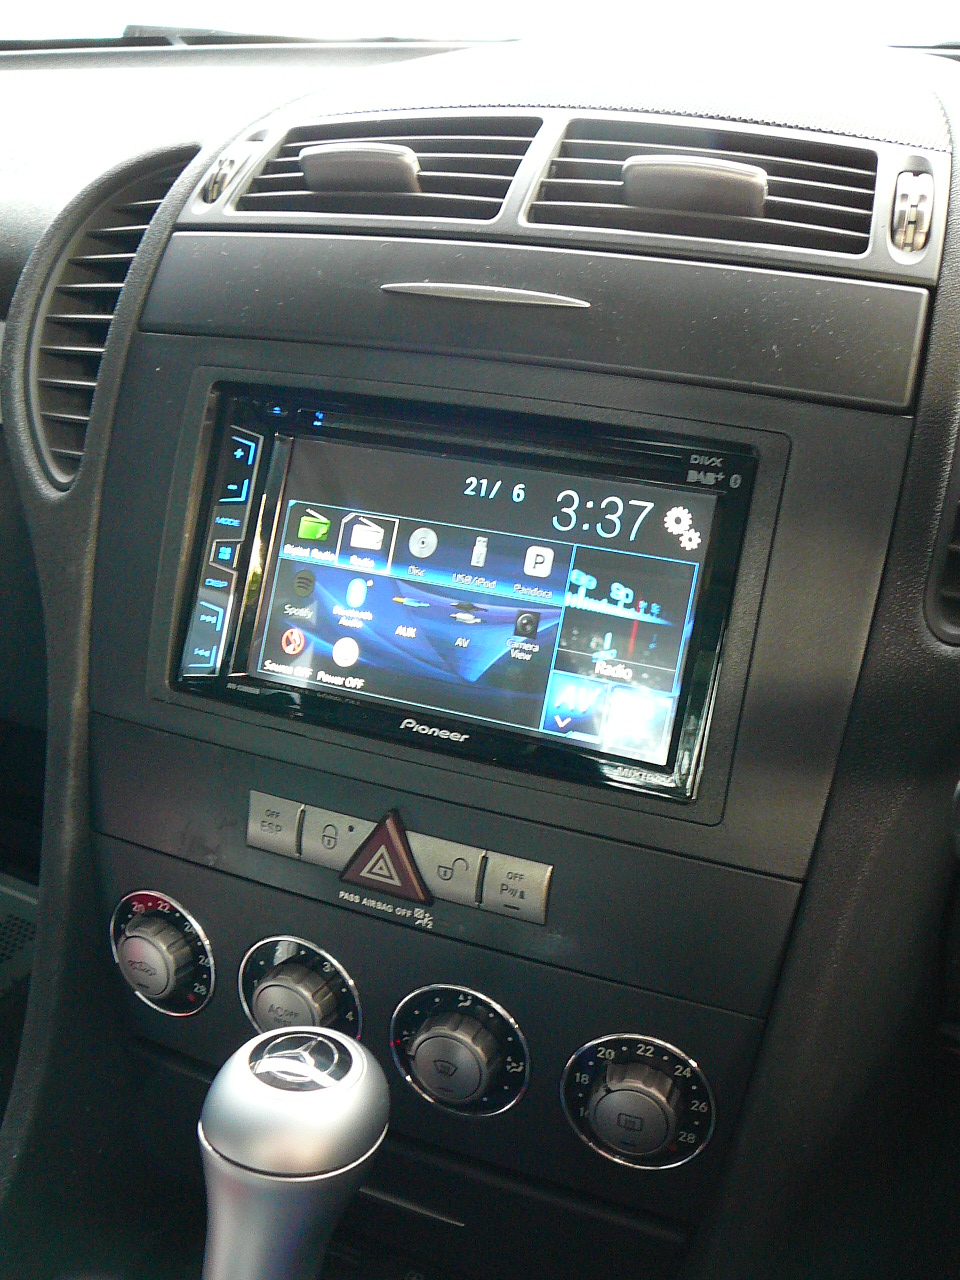 Mercedes Benz SLK, Pioneer AVH-X3800DAB Audio Visual Unit & Dash Fascia Installation